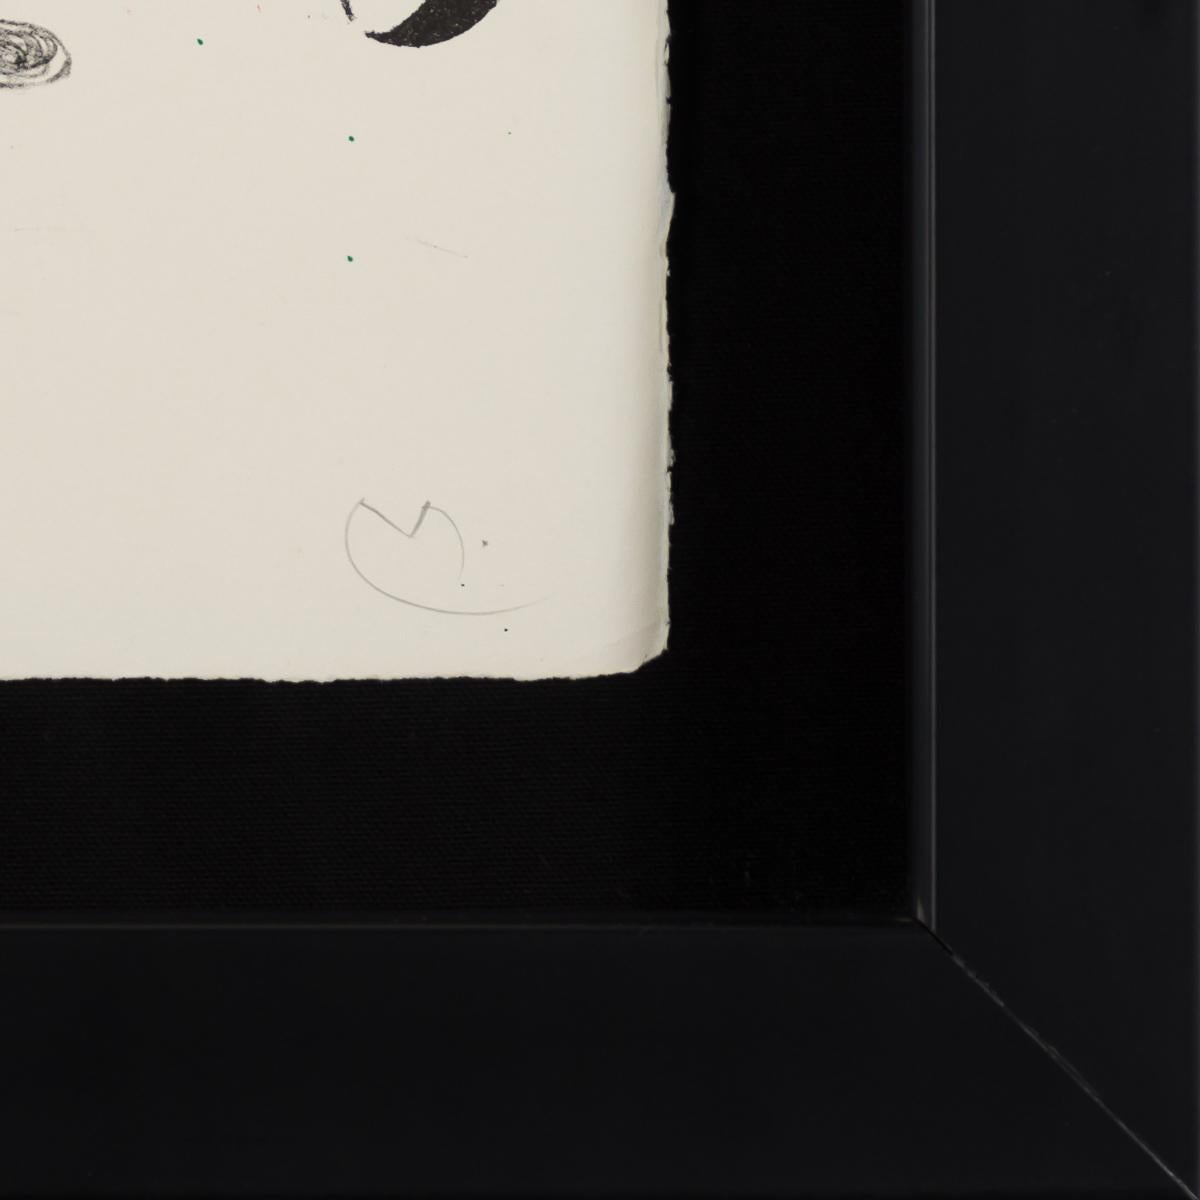 Untitled, 1961 (Album 19, M.260) - Modern Print by Joan Miró